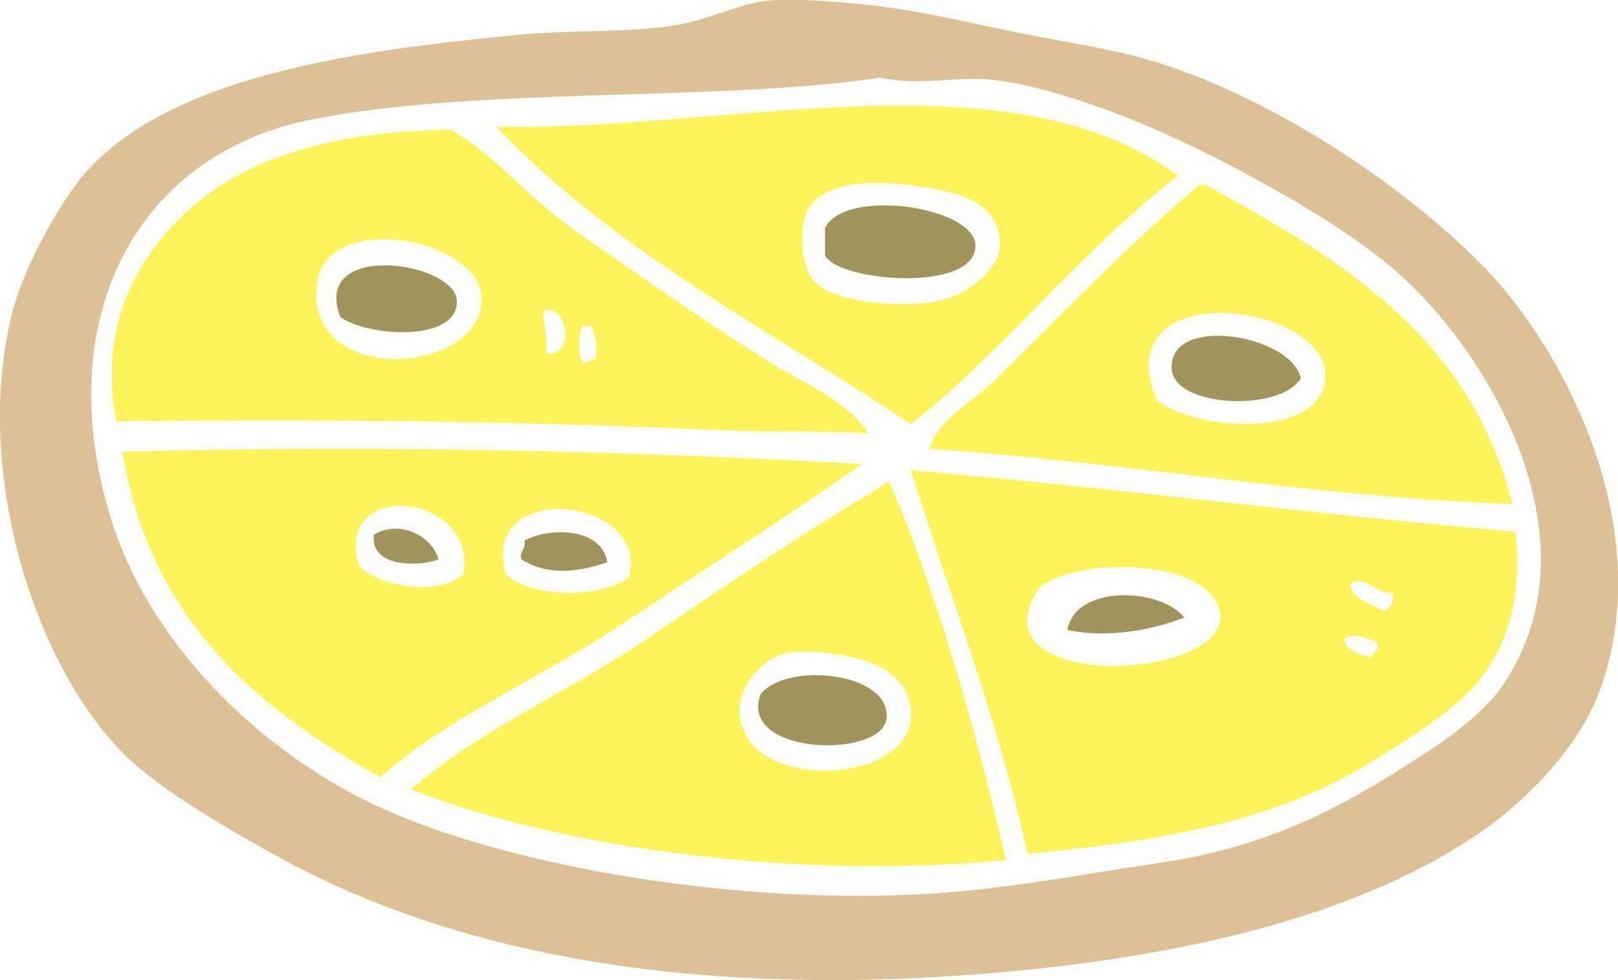 tecknad doodle pizza vektor